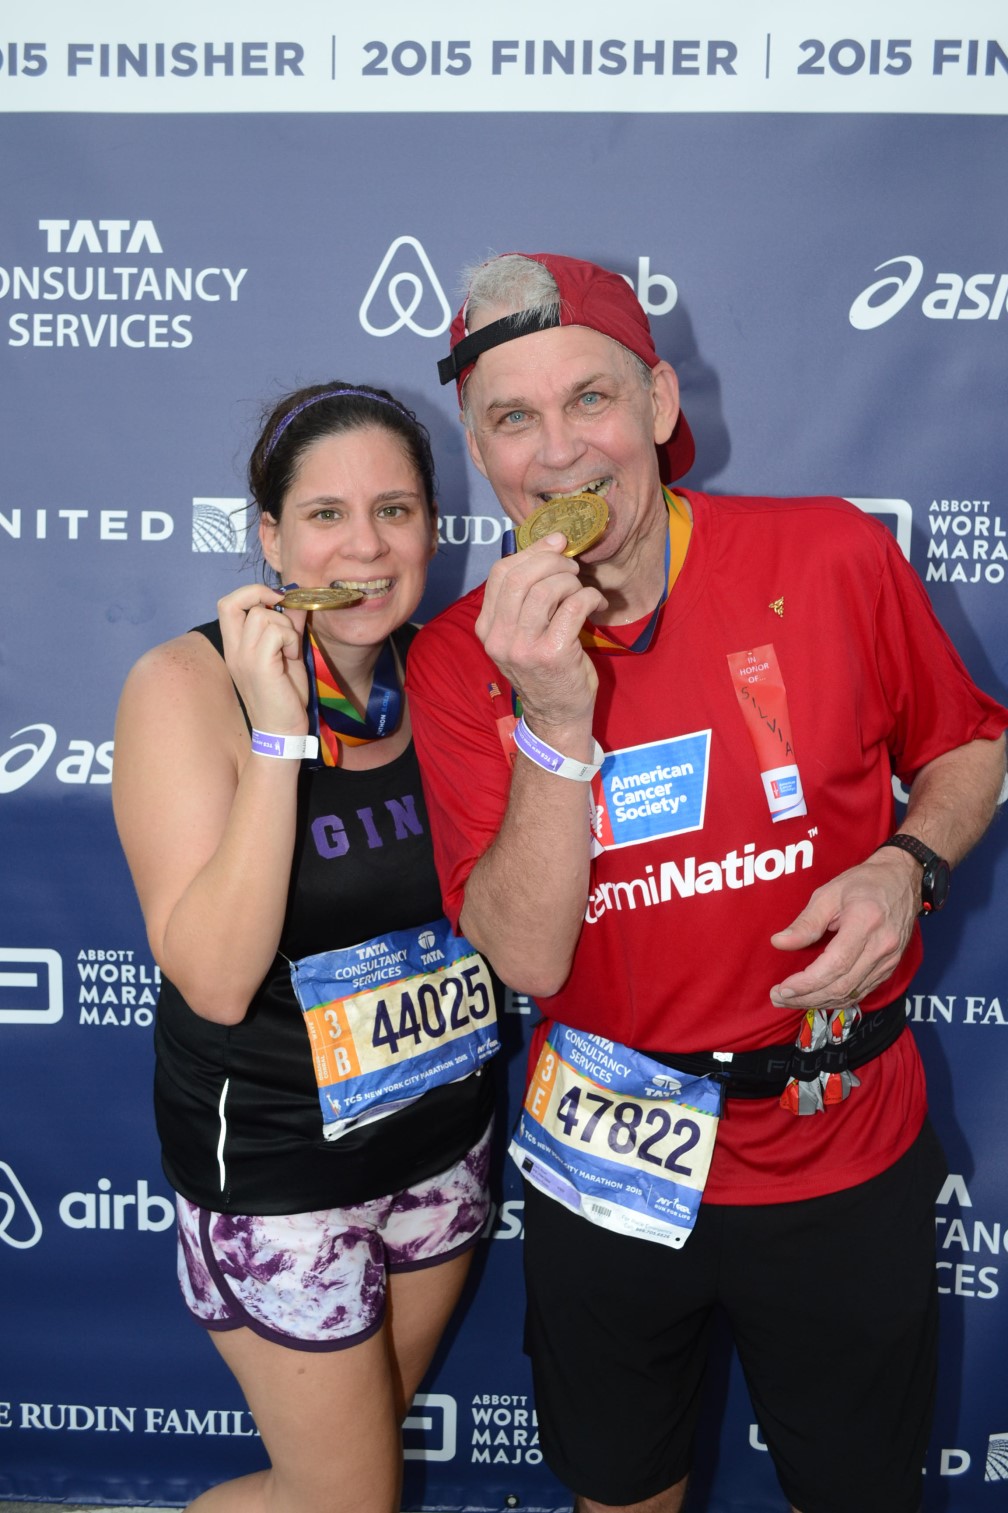 Gina Alvarez and Bob Davis after finishing the New York City Marathon